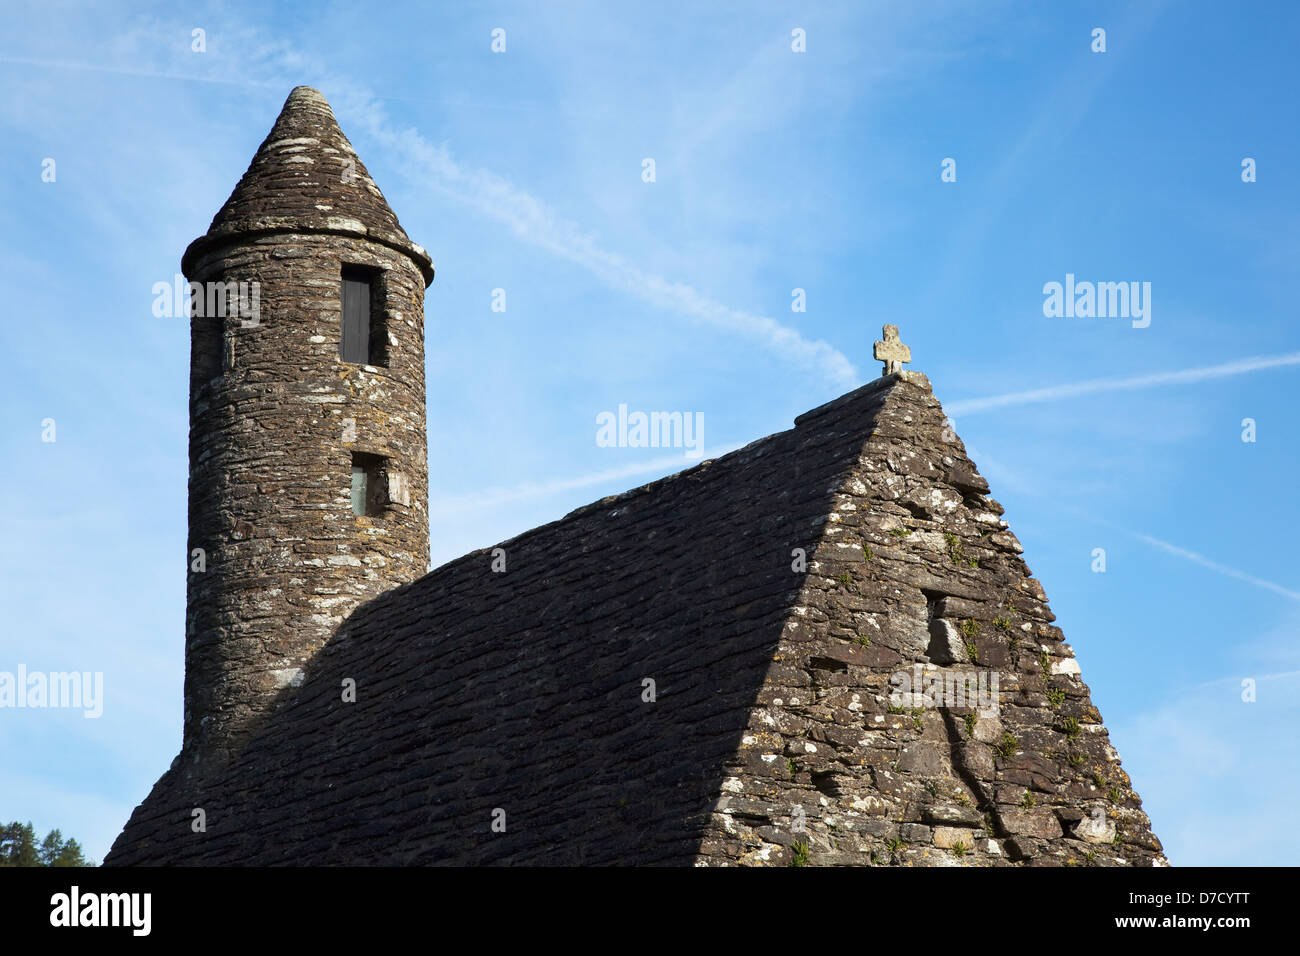 Saint kevin's church;Glendalough county wicklow ireland Stock Photo